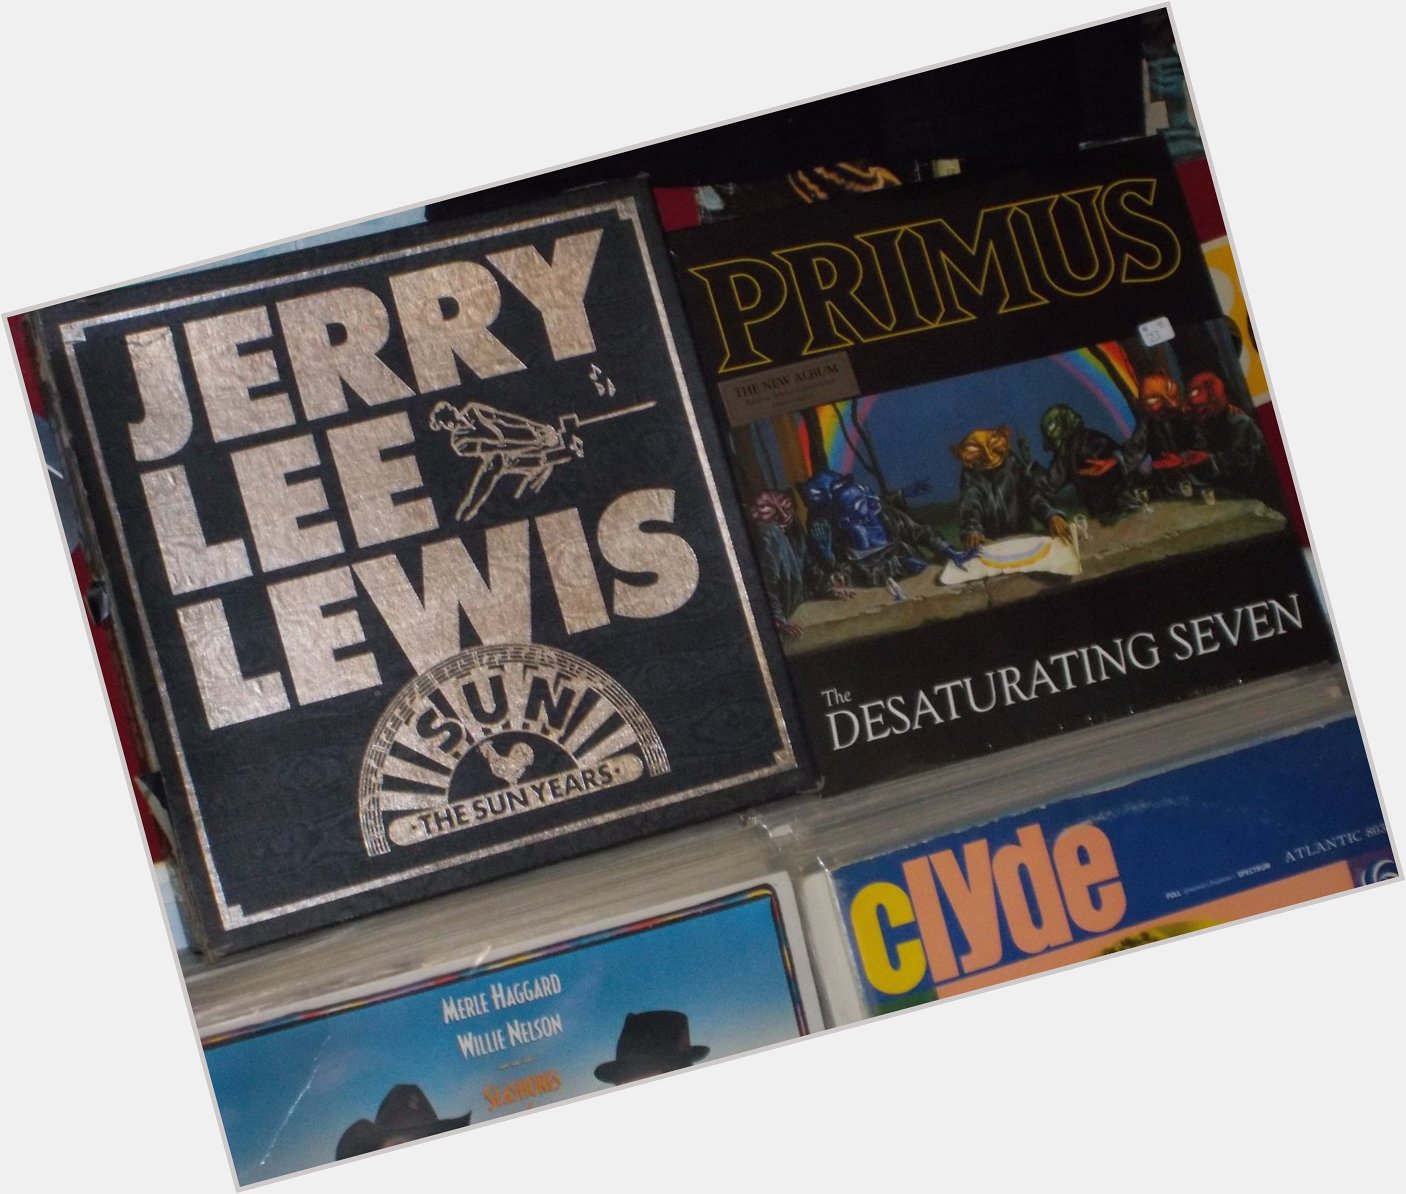 Happy Birthday to Jerry Lee Lewis & Les Claypool of Primus 